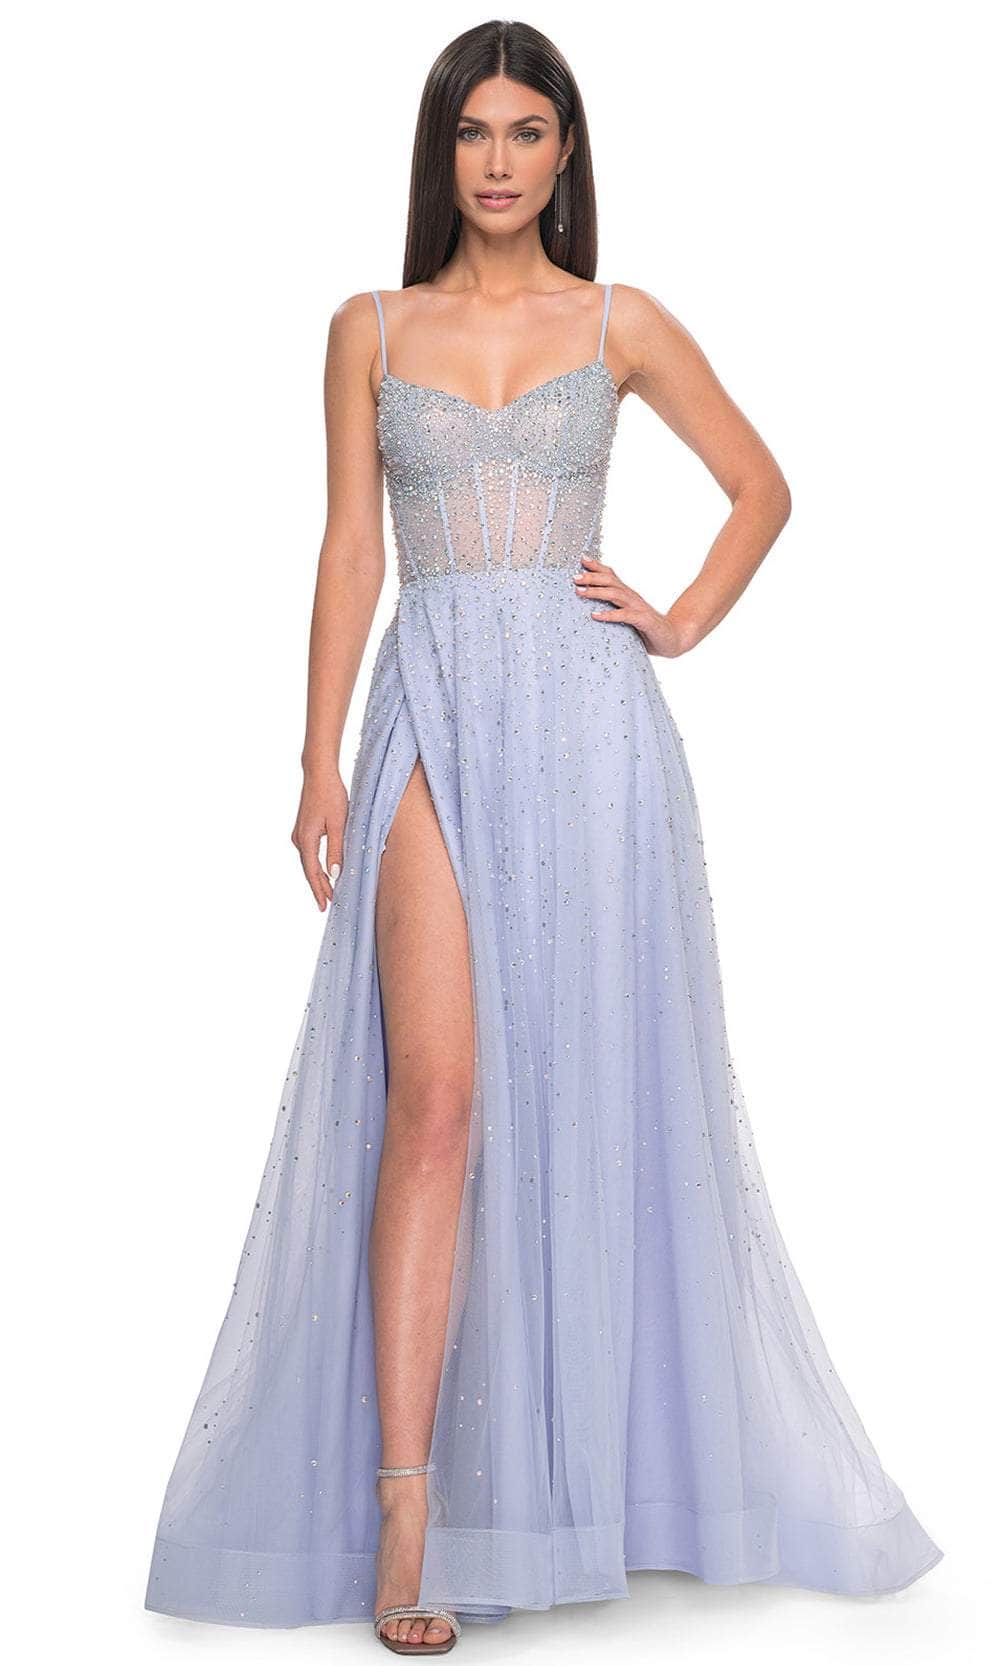 La Femme 32146 - Embellished Tulle Prom Dress Special Occasion Dress 00 / Light Periwinkle